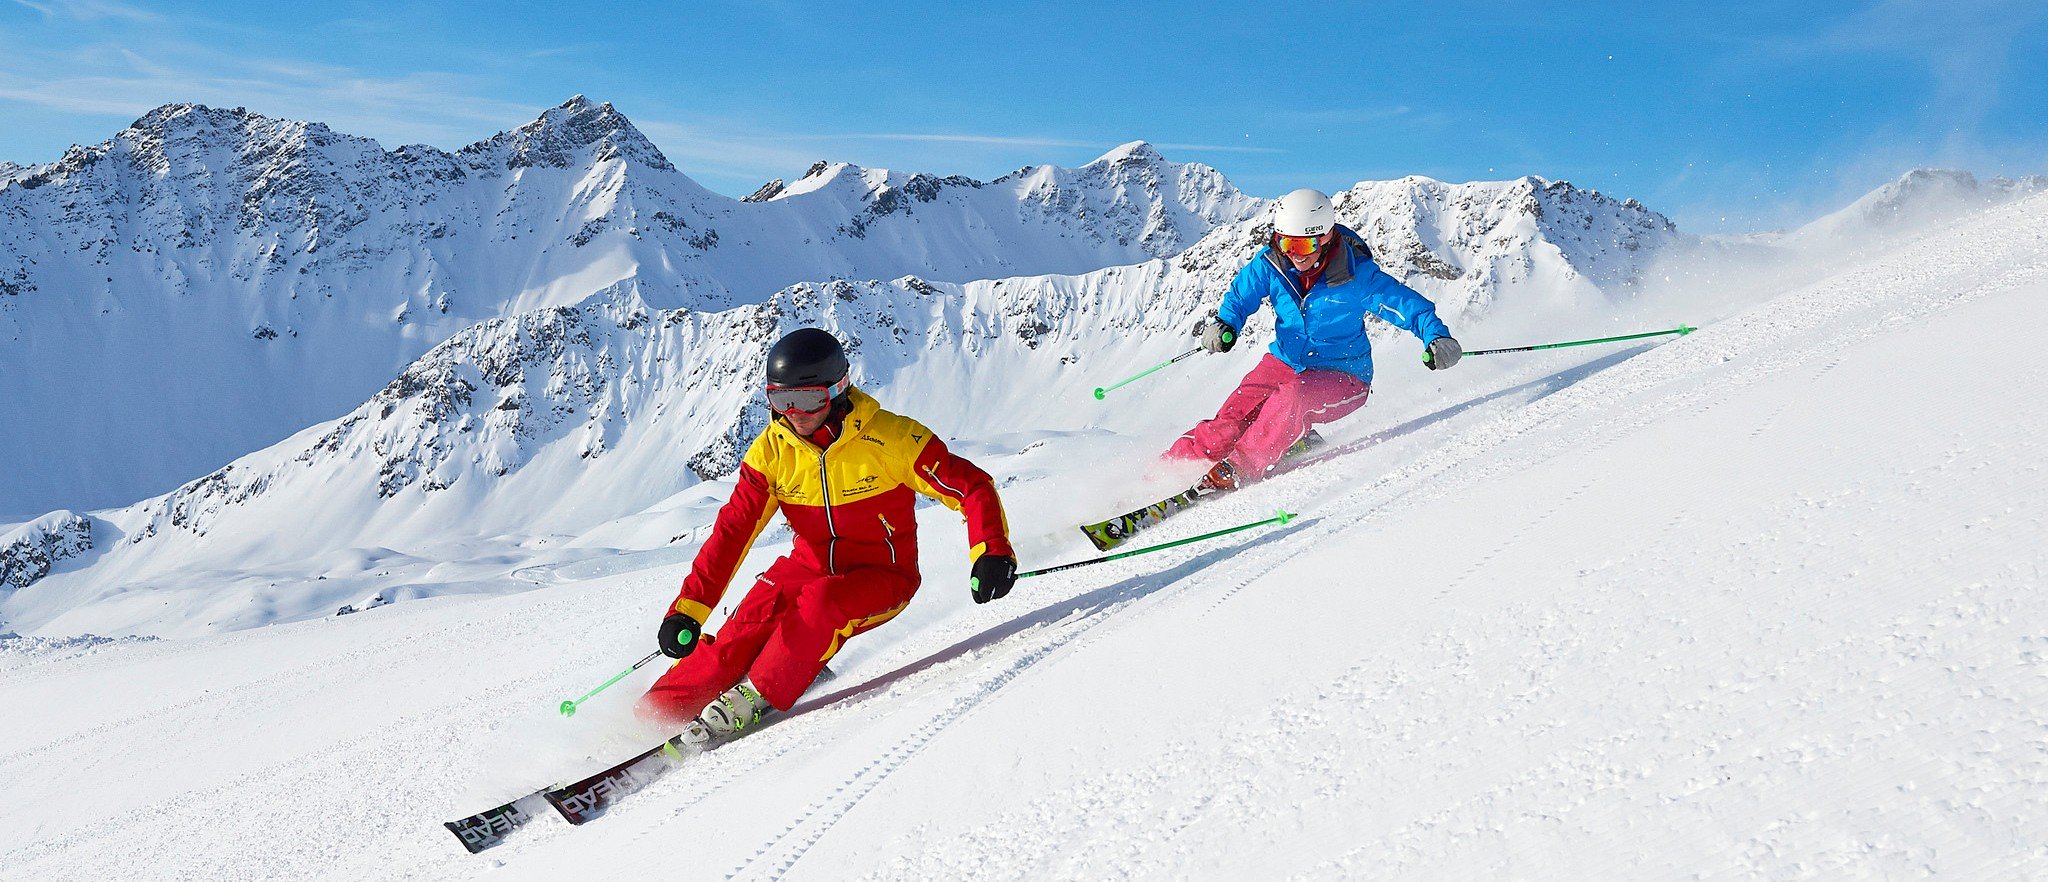 Ski technique - part 2: skiing on steep slopes - tips & technique